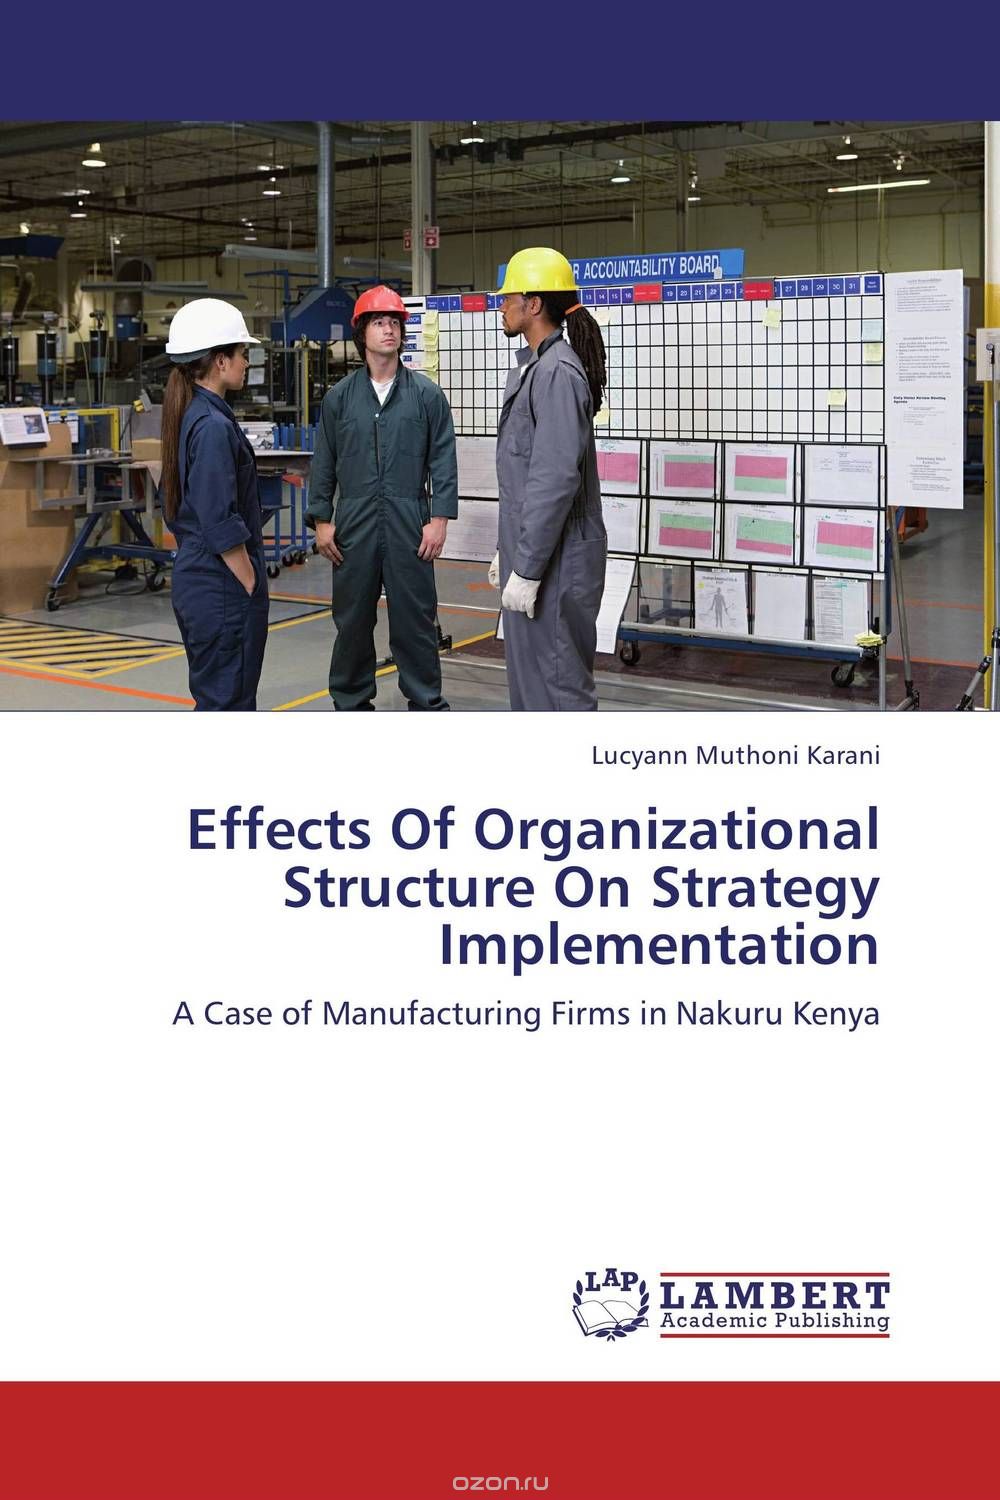 Скачать книгу "Effects Of Organizational Structure On Strategy Implementation"